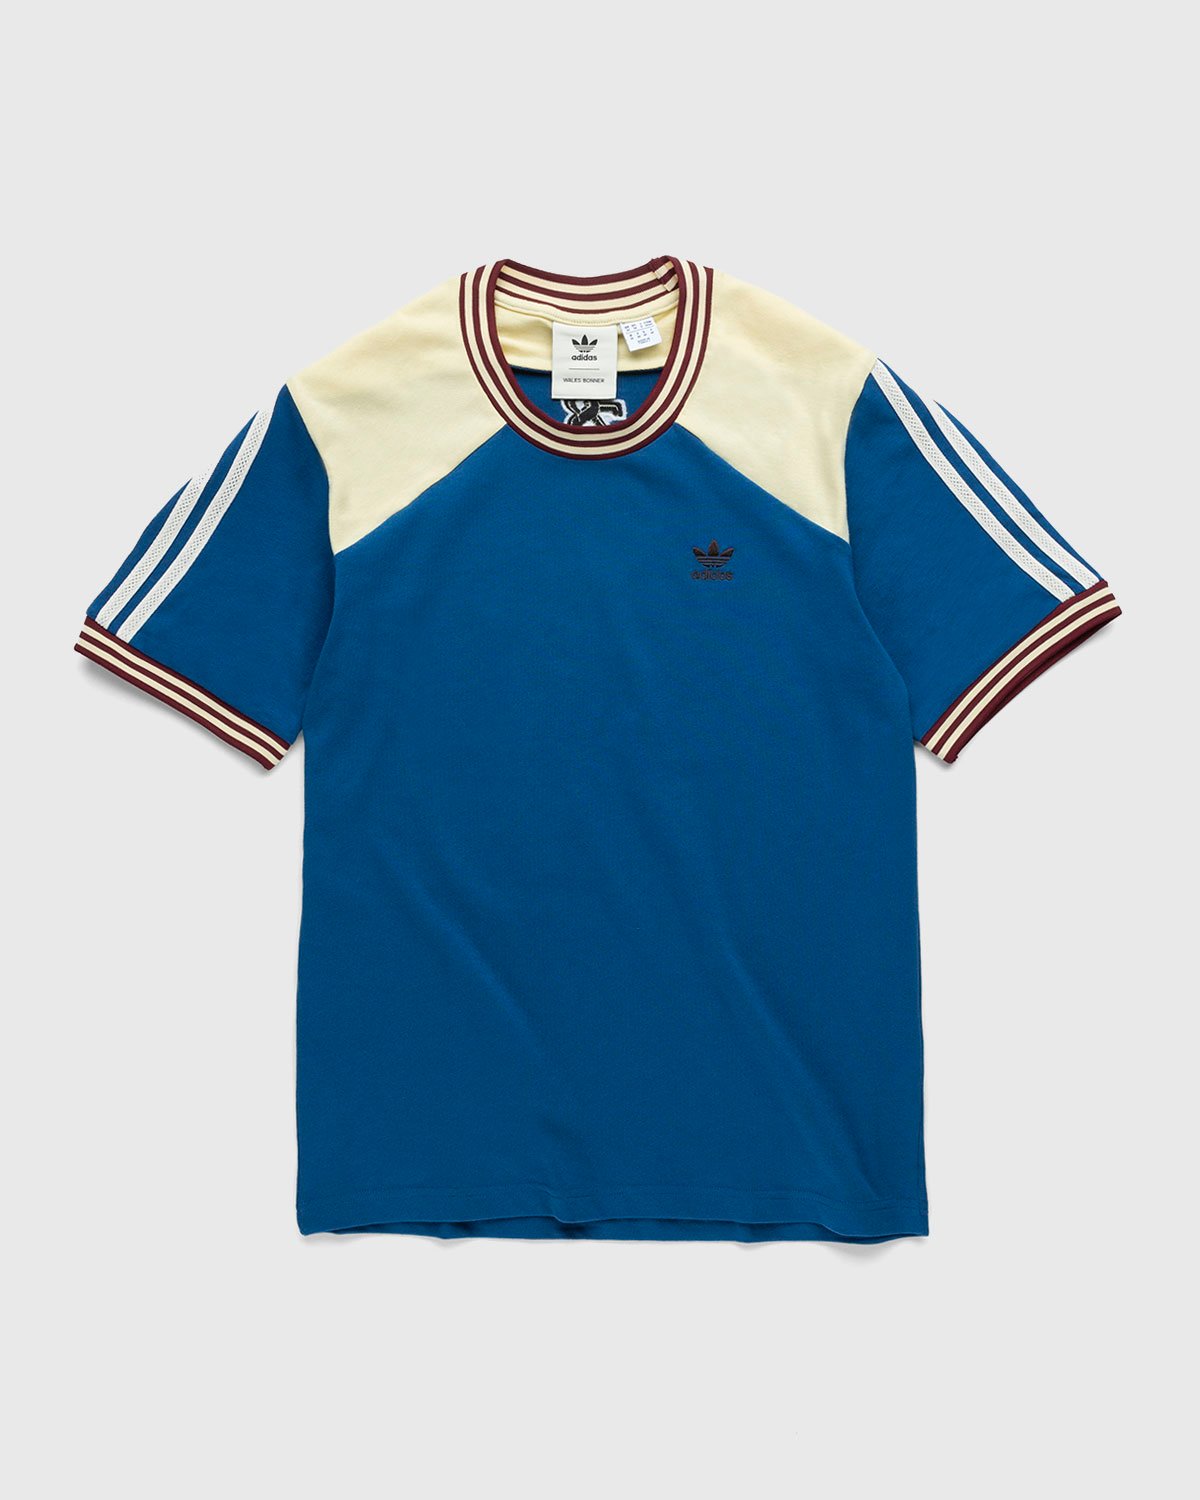 Adidas x Wales Bonner - College T-Shirt Dark Marine - Clothing - Blue - Image 1